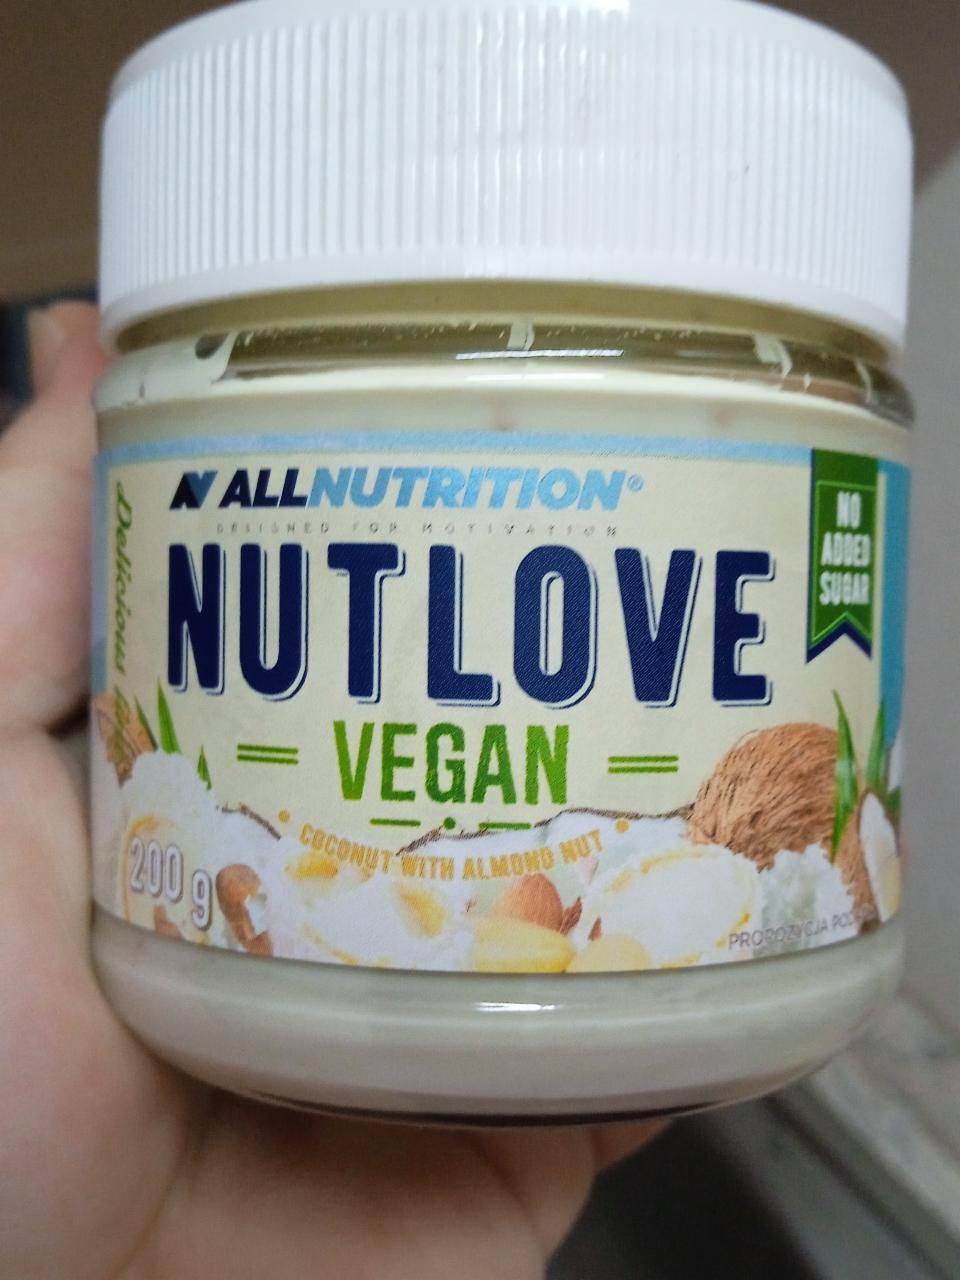 Fotografie - Nutlove Vegan Coconut with almond nut